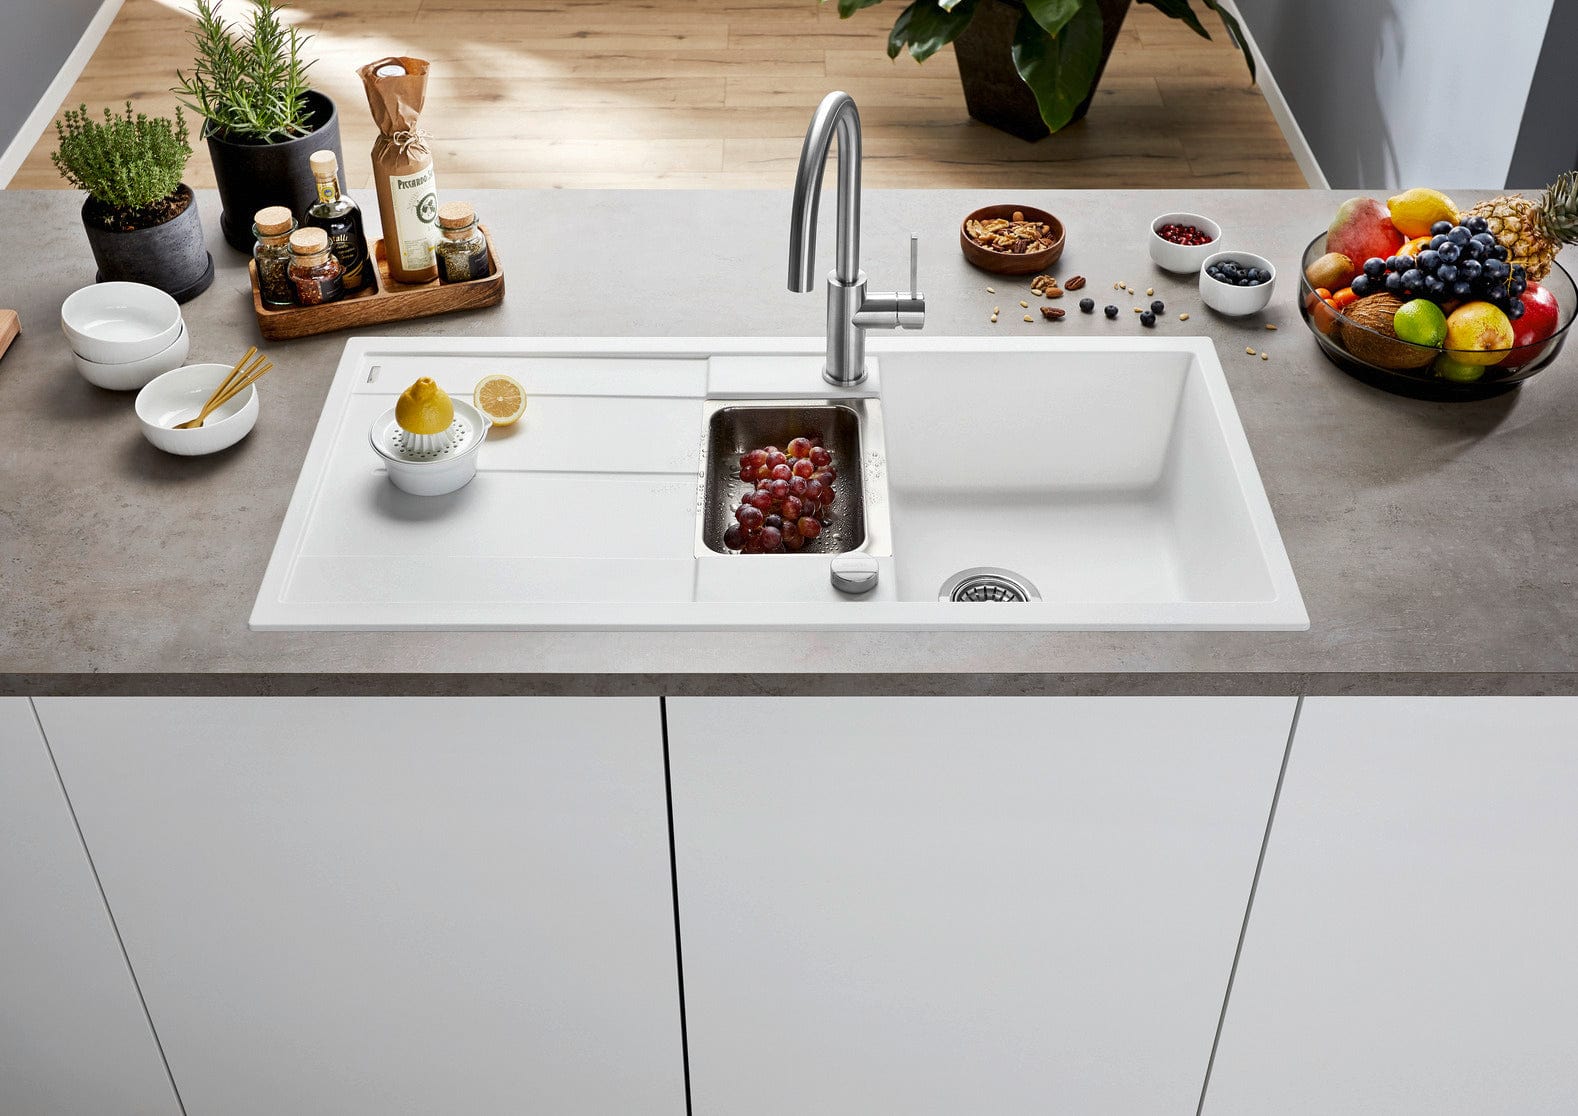 Blanco Kitchen Sinks - Granite Blanco Silgranit Metra 6 S Double Sink with Drainer | White